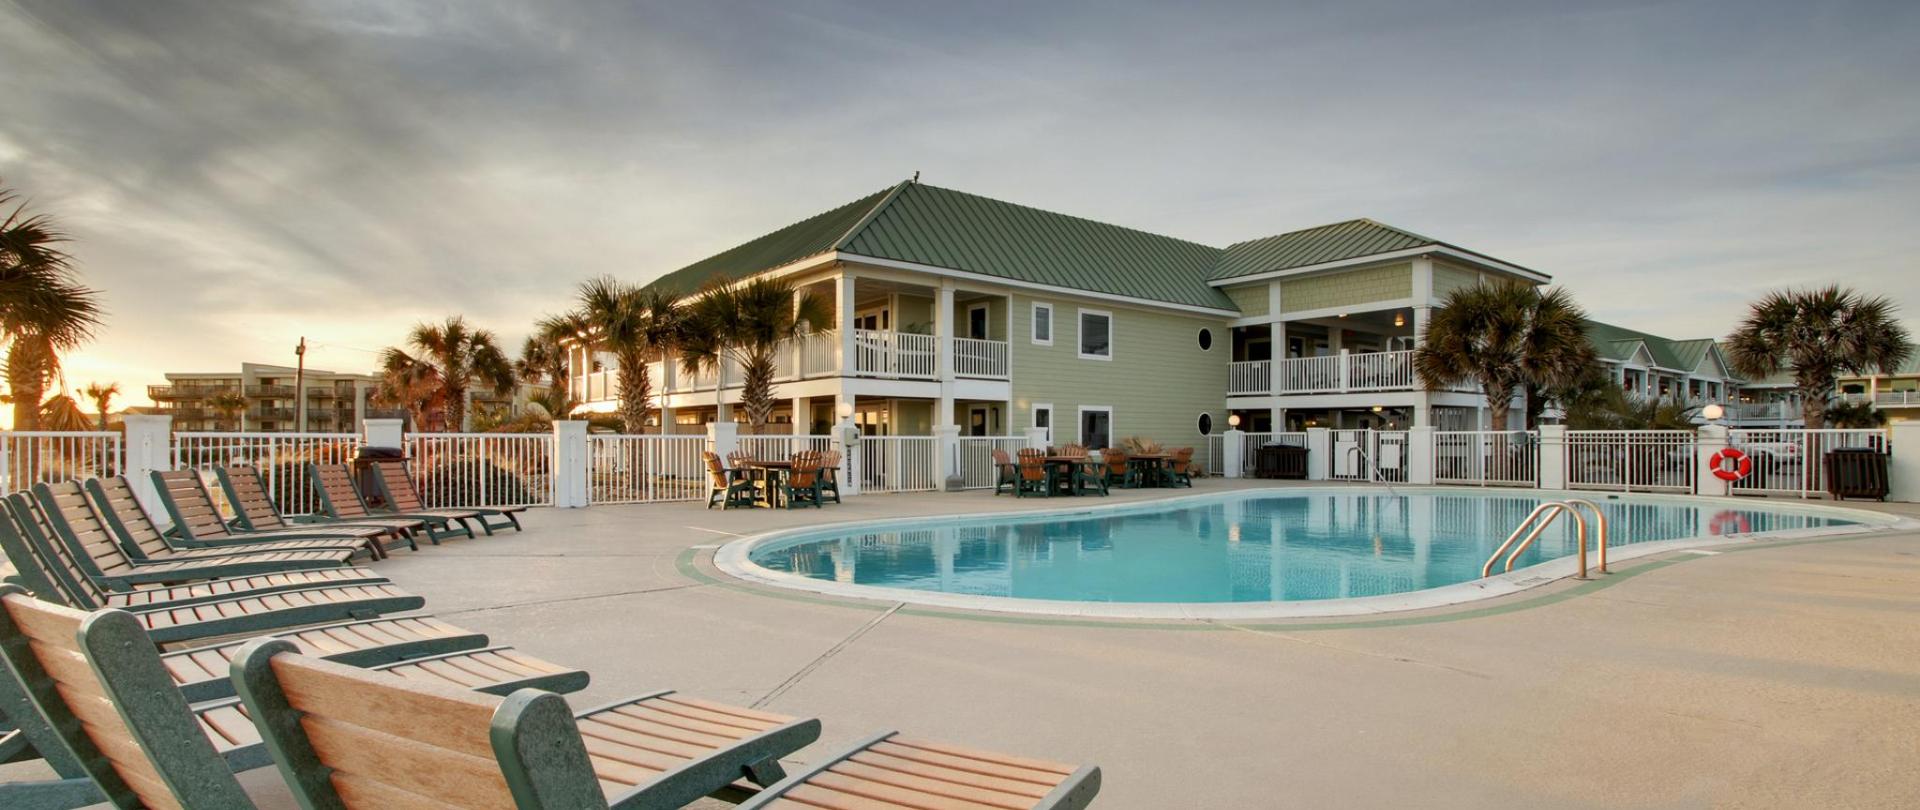 Islander Hotel Resort Oceanfront Hotel In Emerald Isle Nc